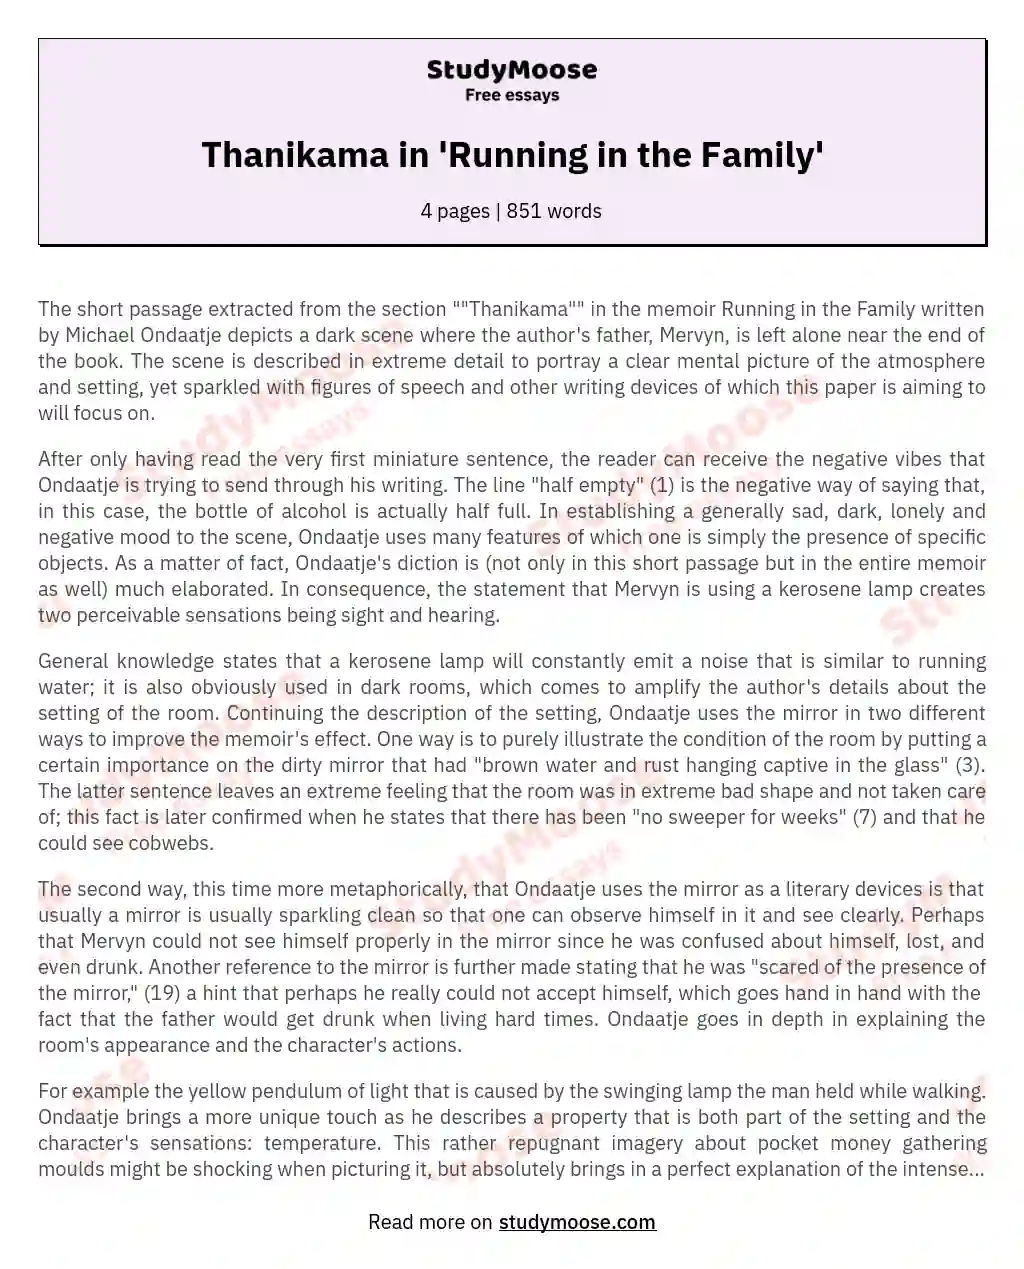 Thanikama in 'Running in the Family' essay